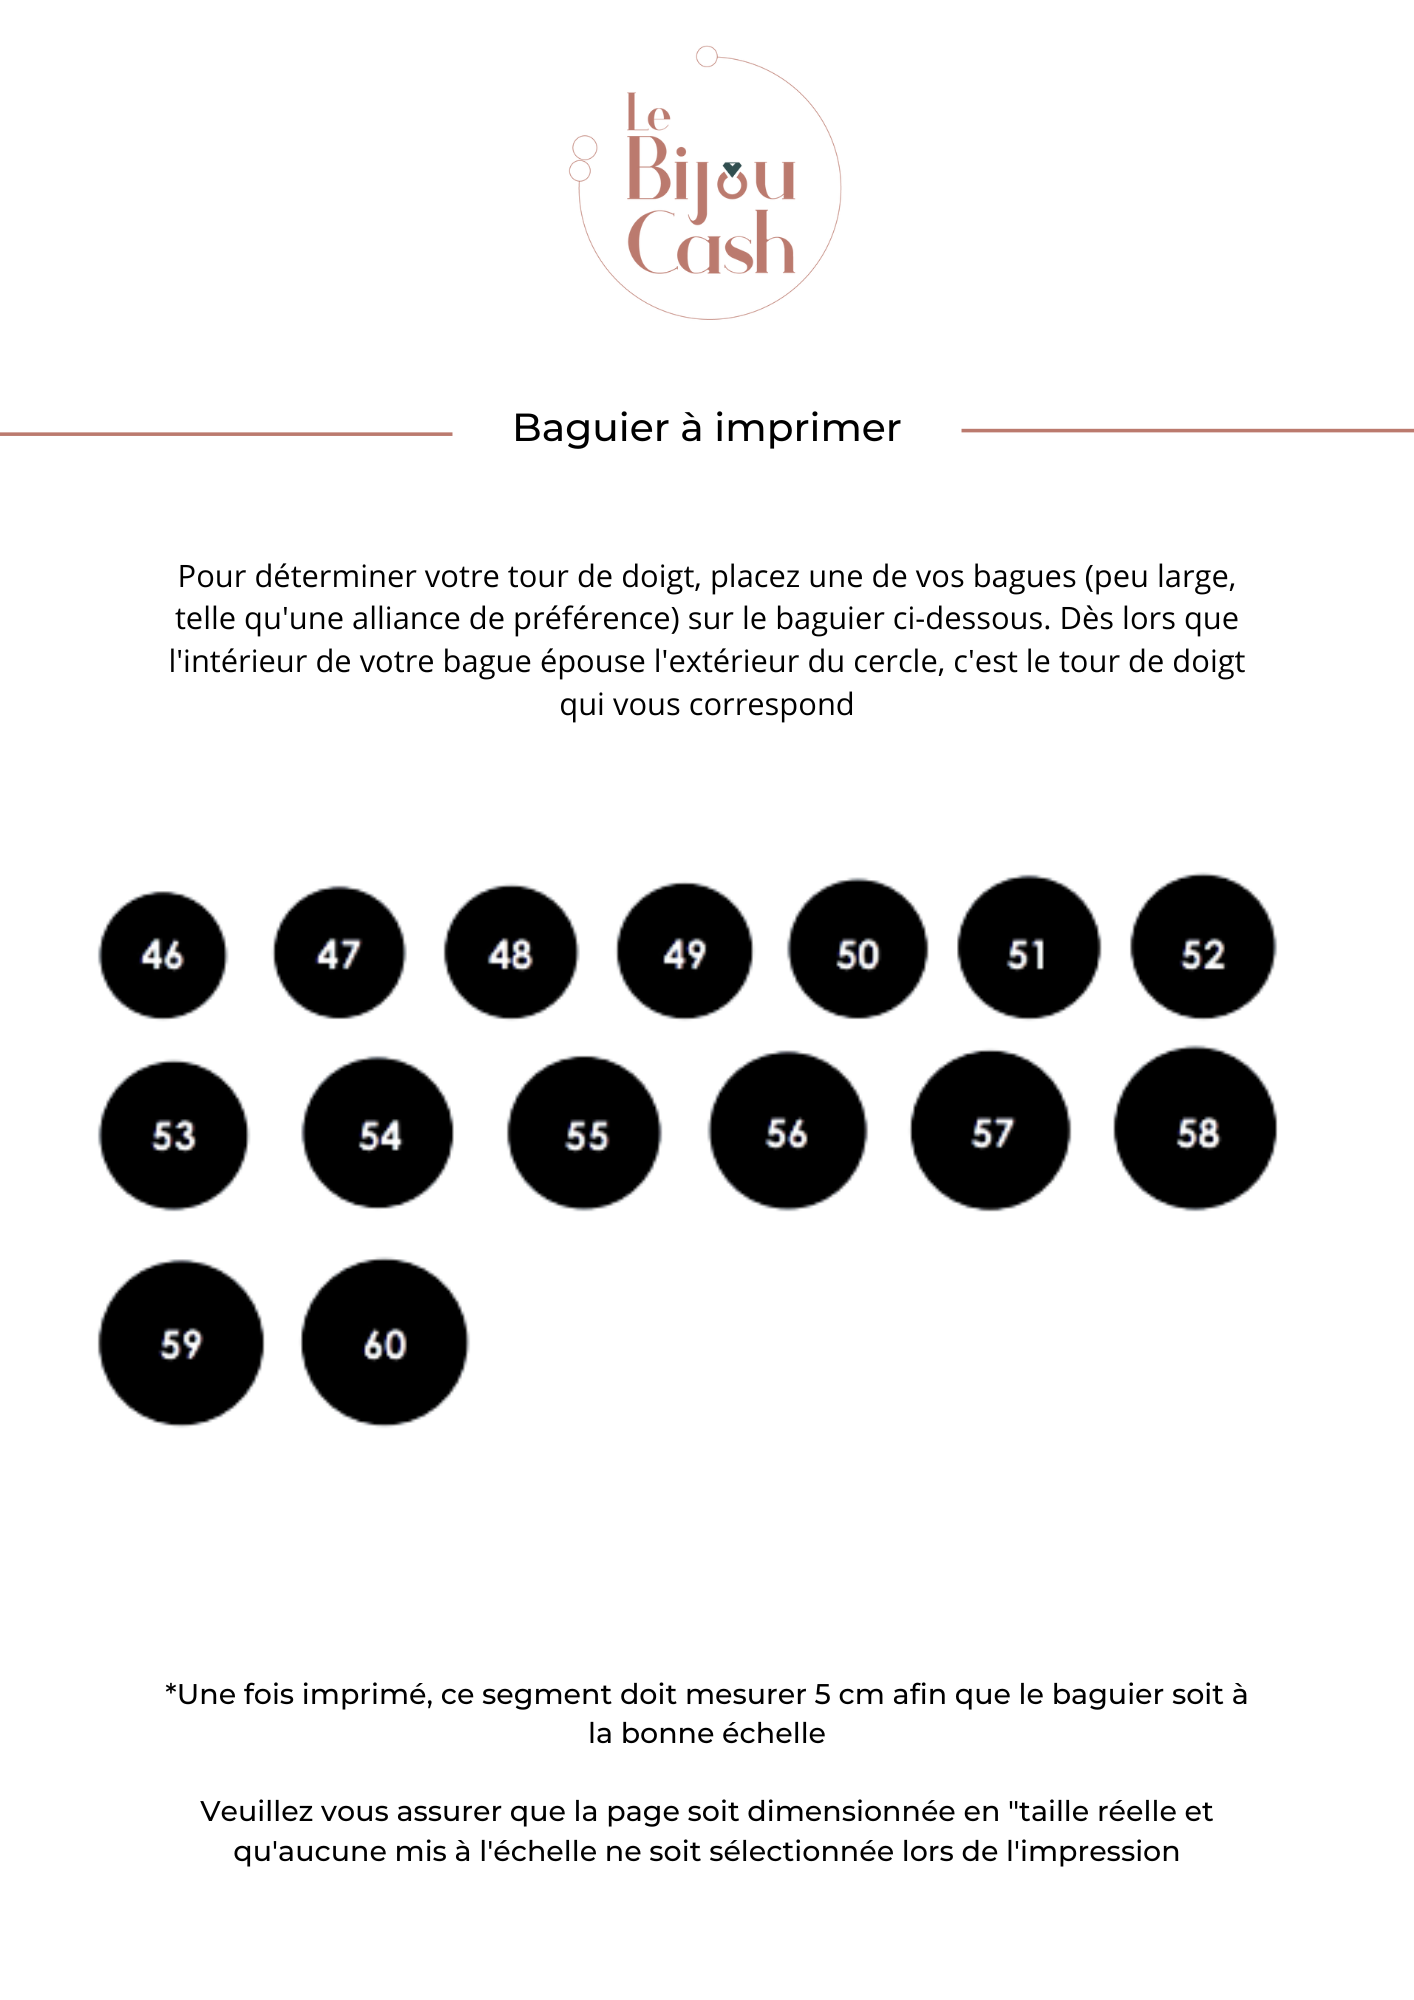 baguier_a_imprimer